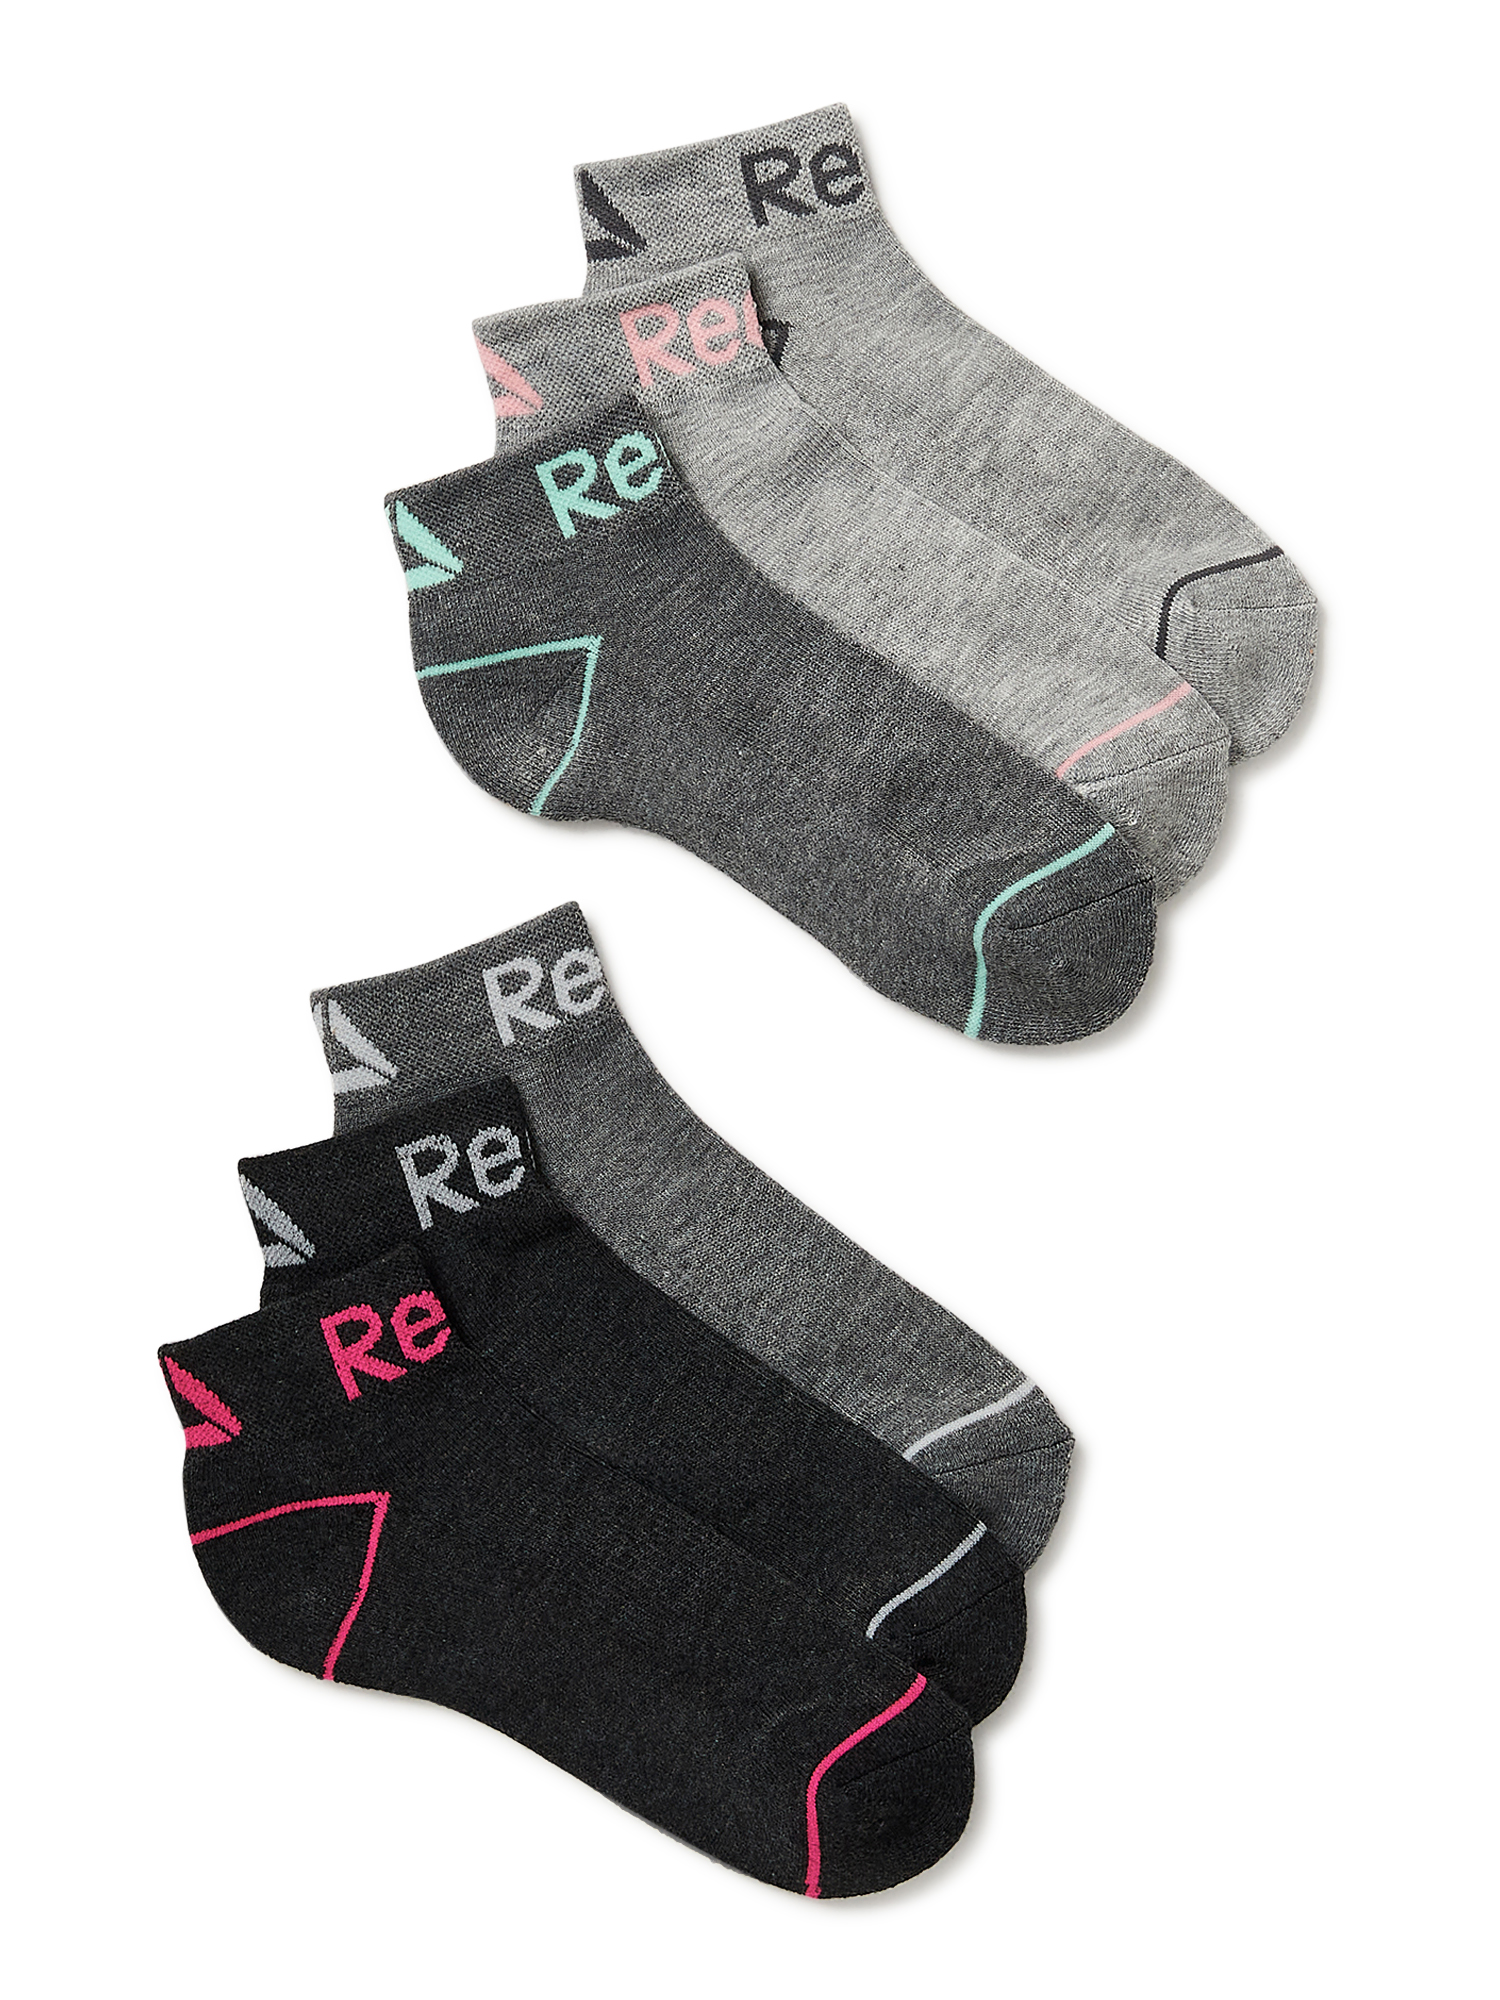 Reebok Women's Cushion Quarter Socks, 6-Pack - image 3 of 9